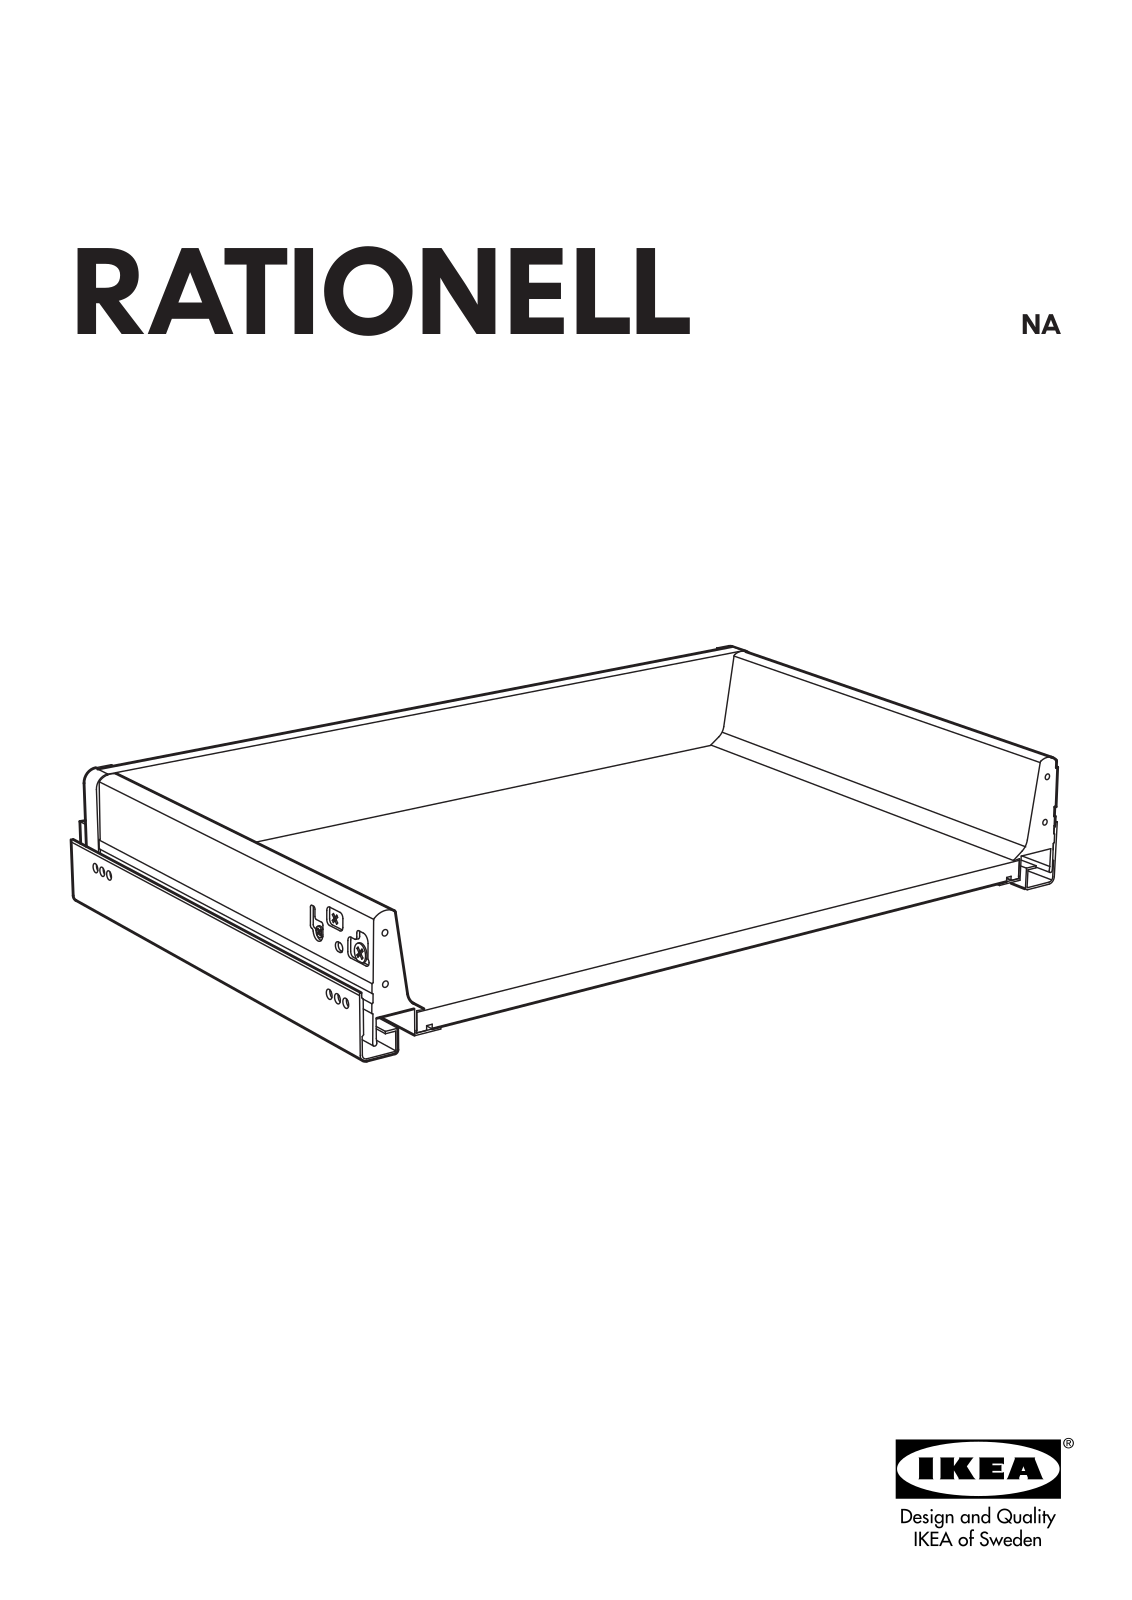 IKEA RATIONELL FULL-EXTENDING DRAWER DAMPER 24X12